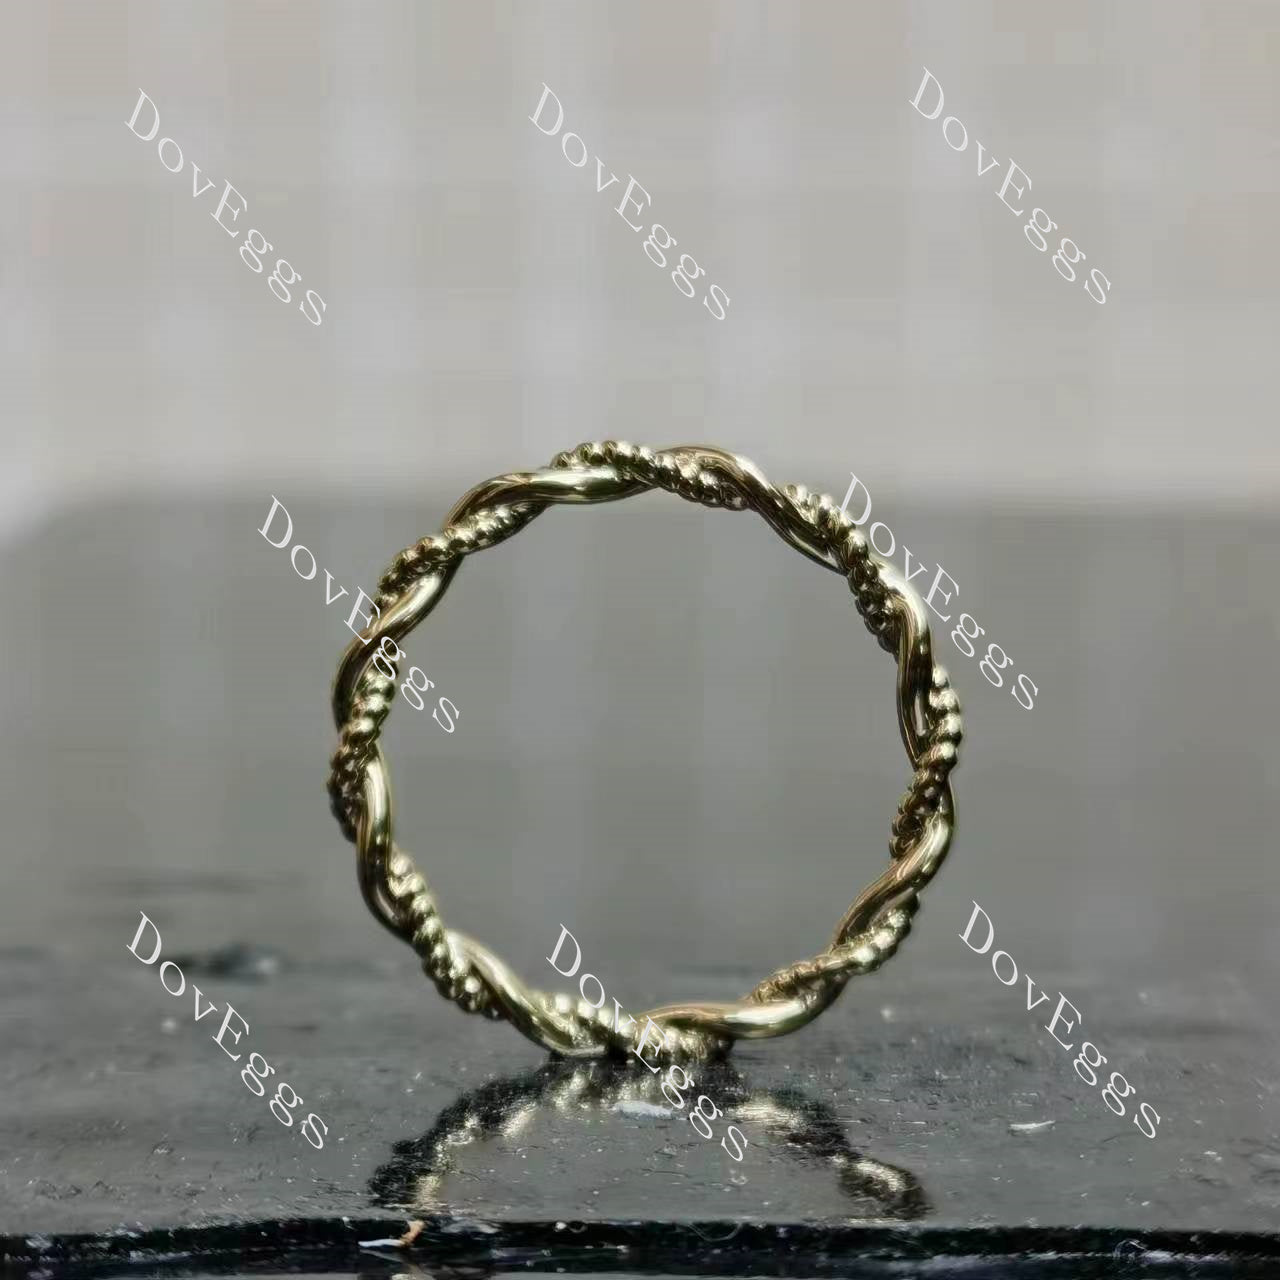 Doveggs braided circle wedding band-2.0mm band width